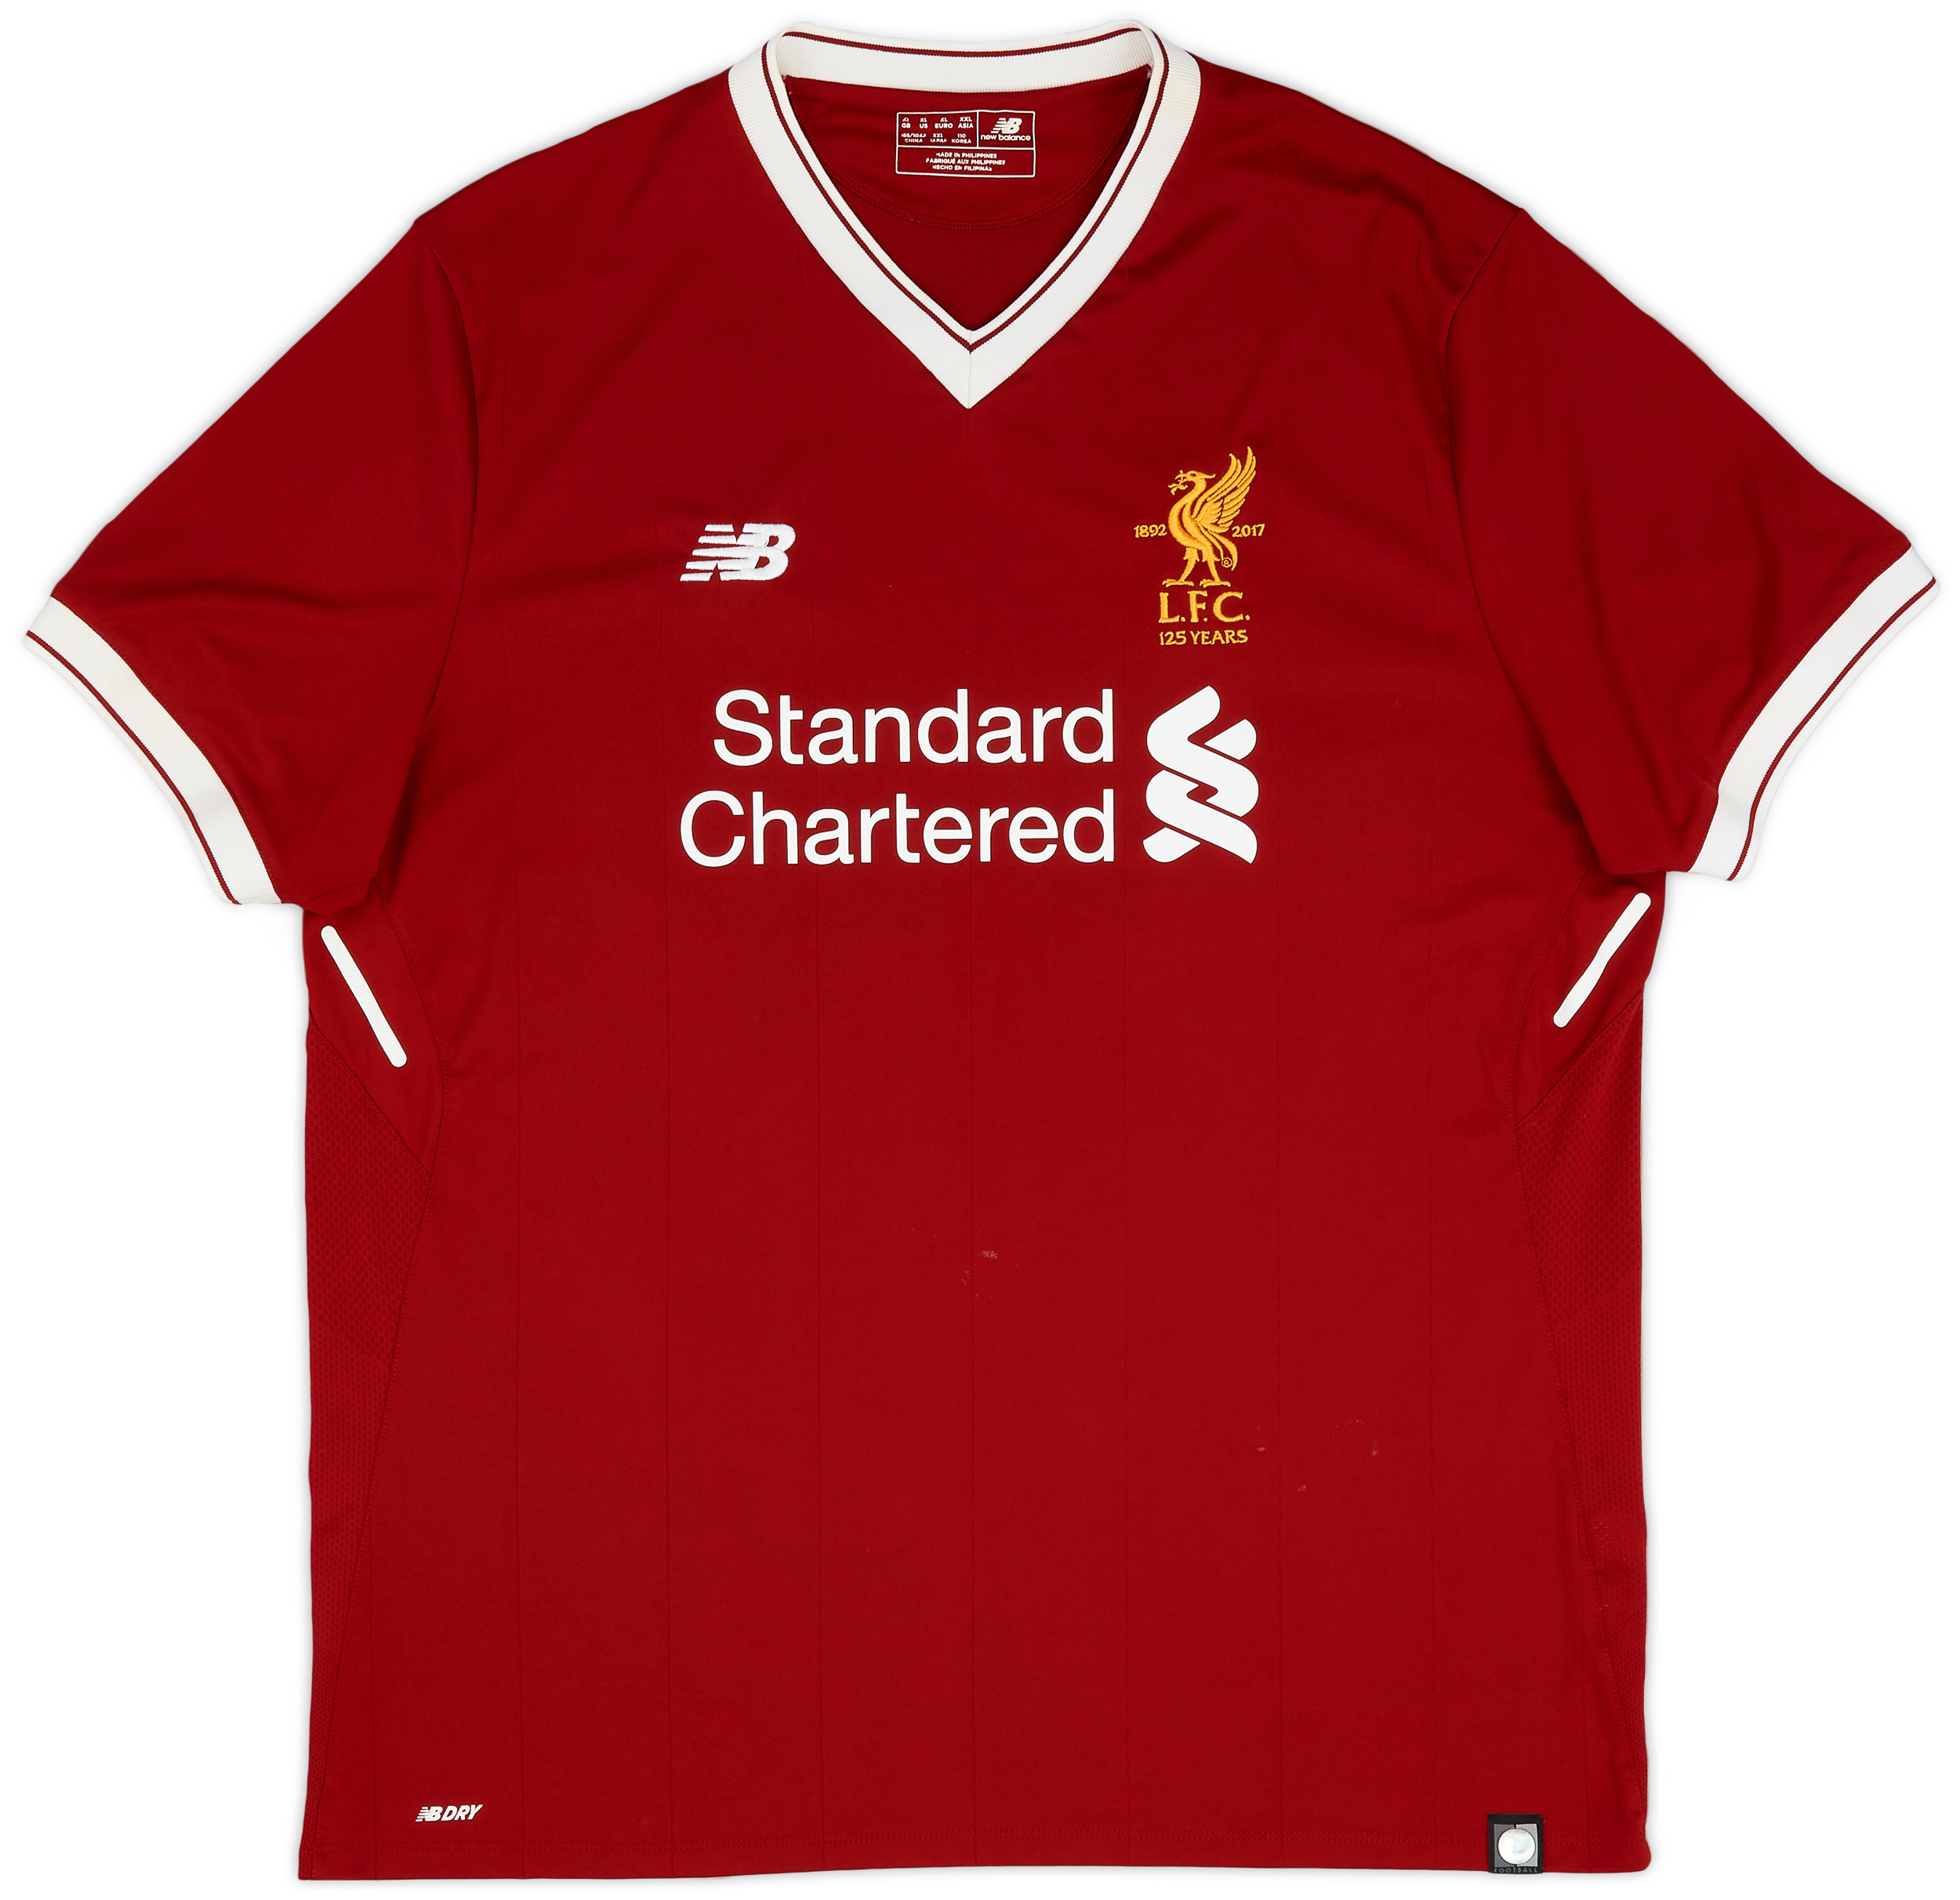 2017-18 Liverpool 125 Years Home Shirt - 7/10 - ()